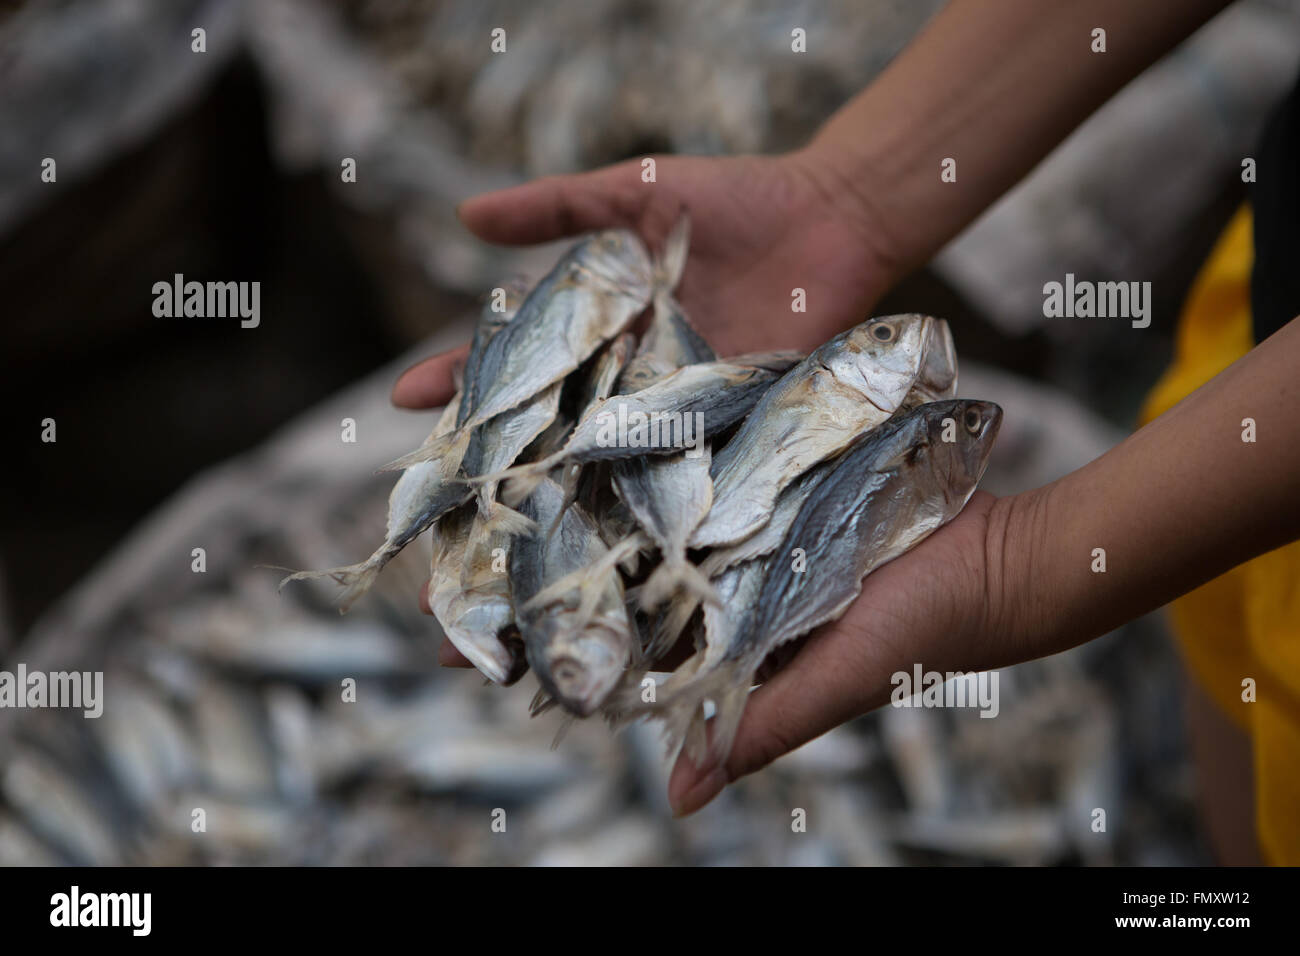 Dried fish for sale,Taboan Market,Cebu City,Philippines Stock Photo